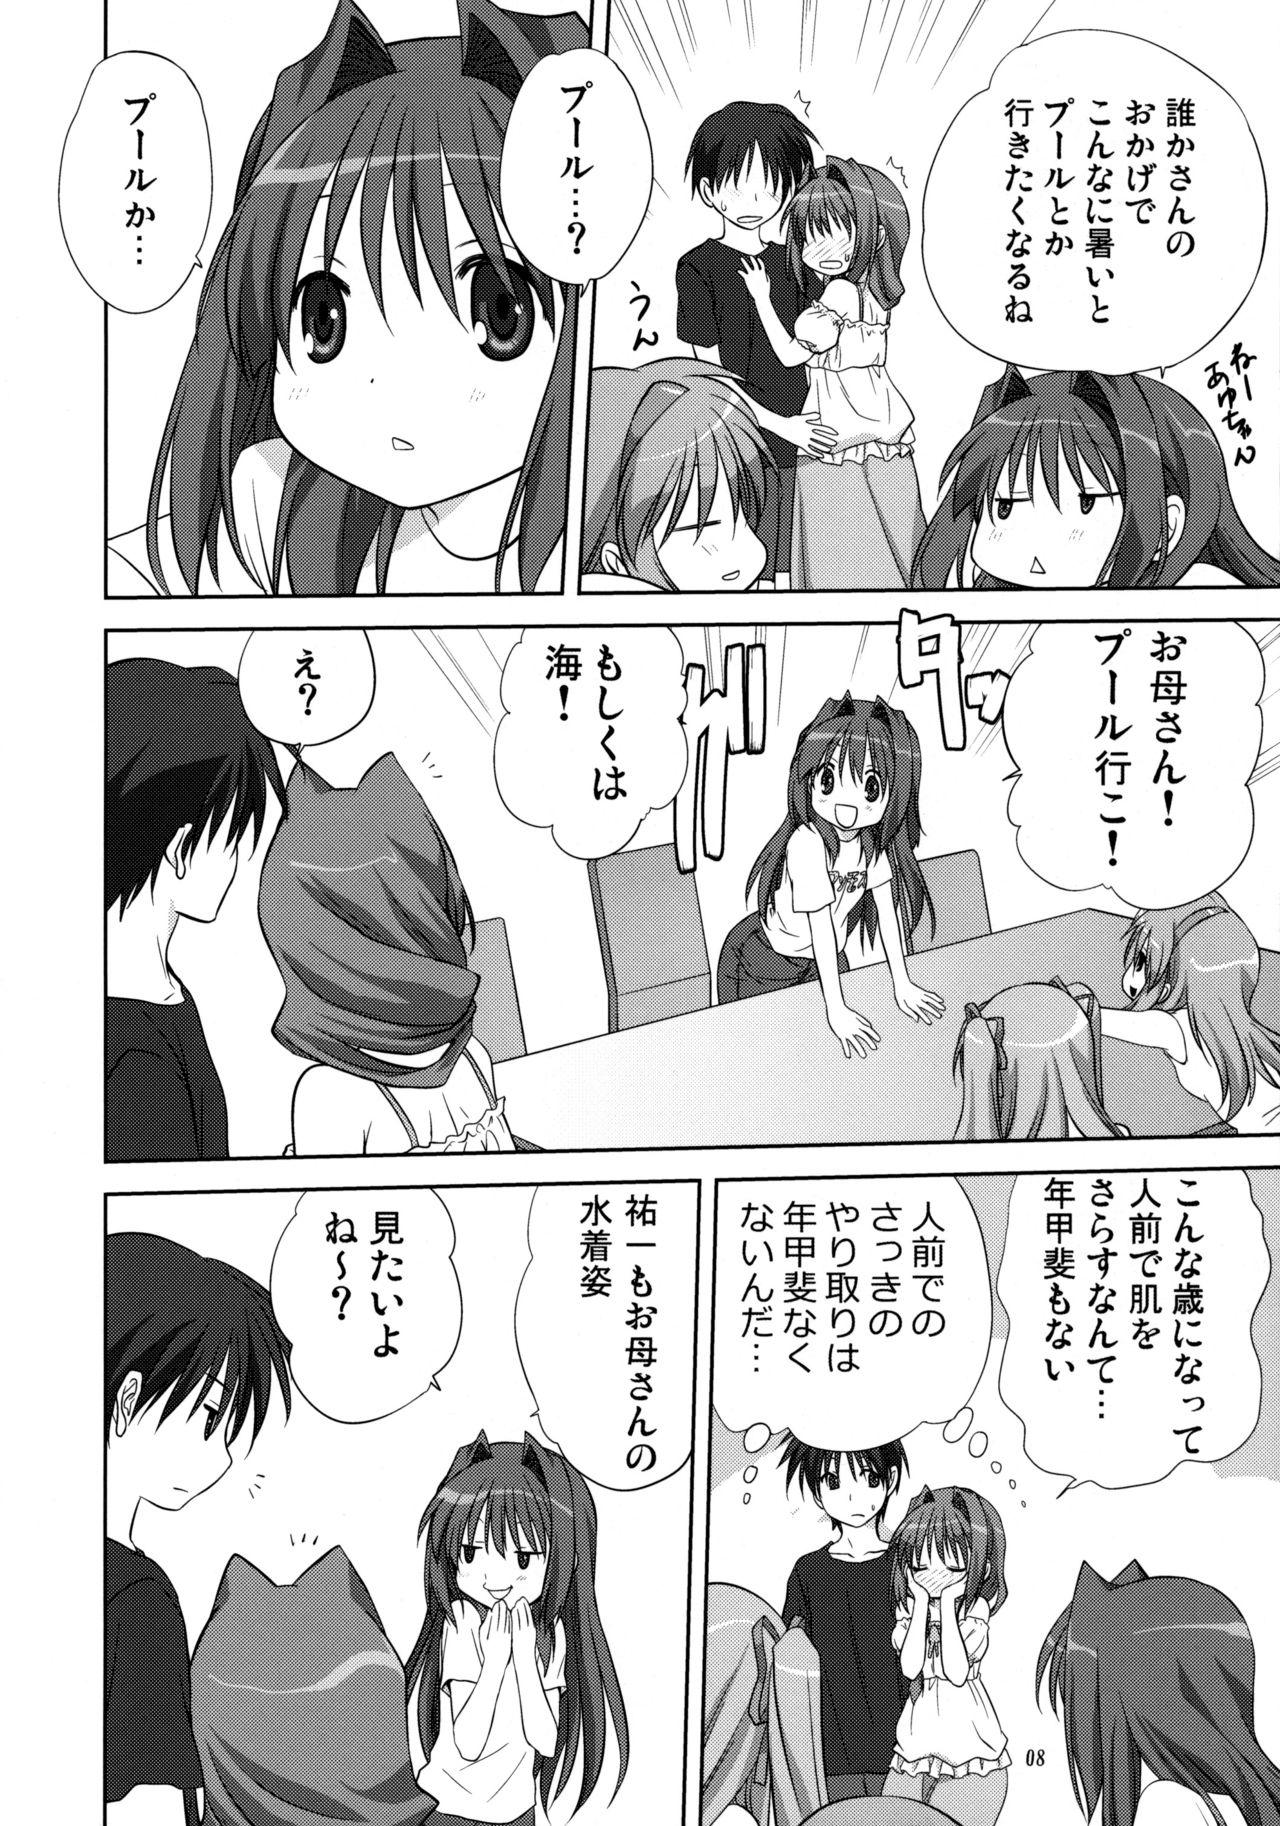 Pauzudo Akiko-san to Issho 8 - Kanon Her - Page 7